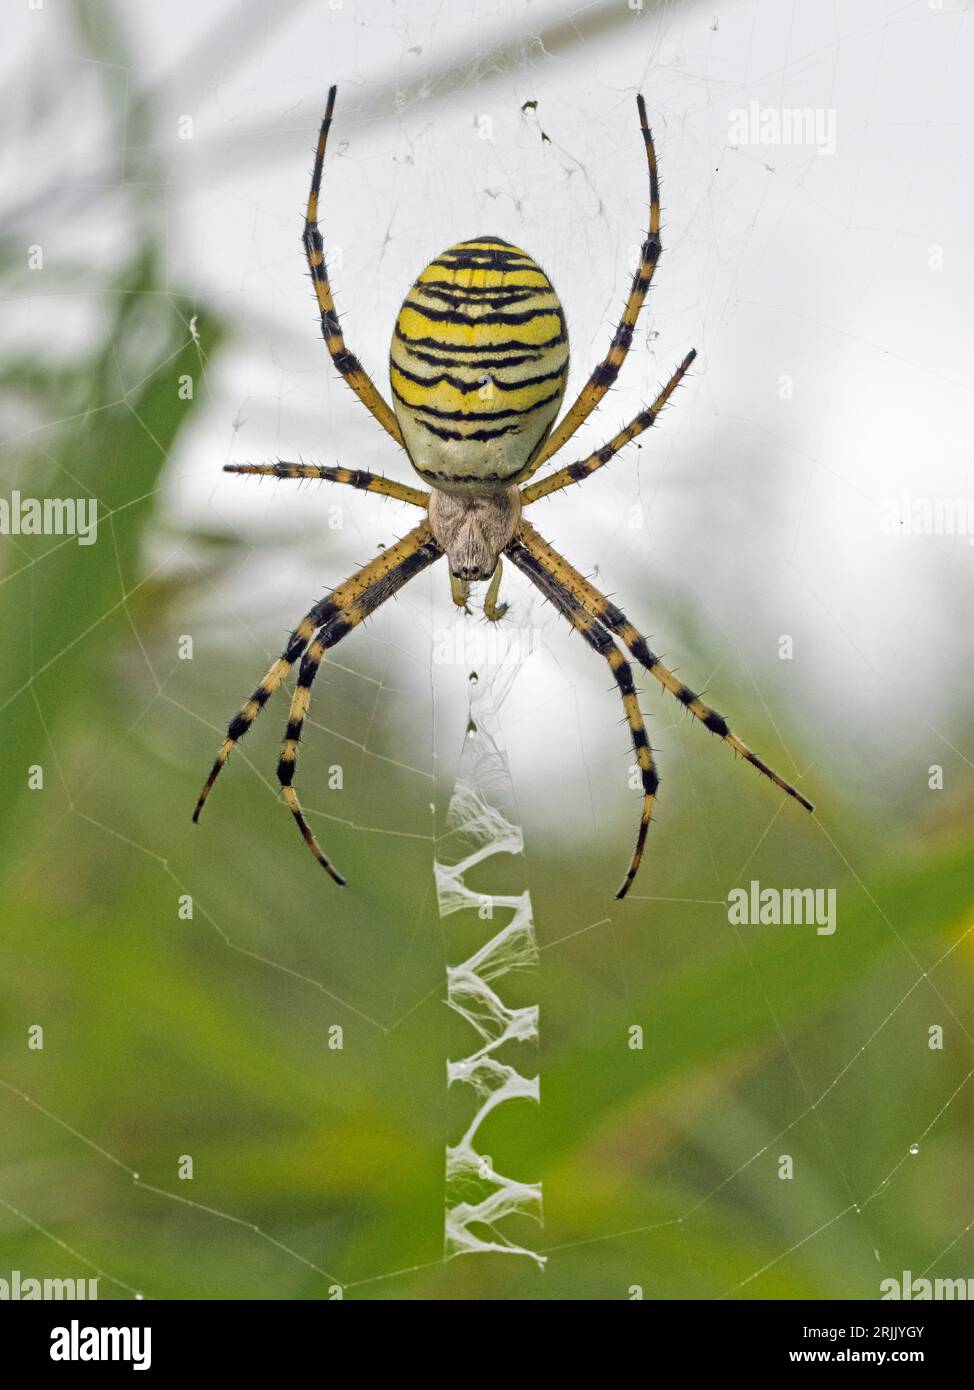 Female Wasp Spider (Argiope bruennichi) and web with stabilimentum, Fulbourn, Cambridgeshire Stock Photo